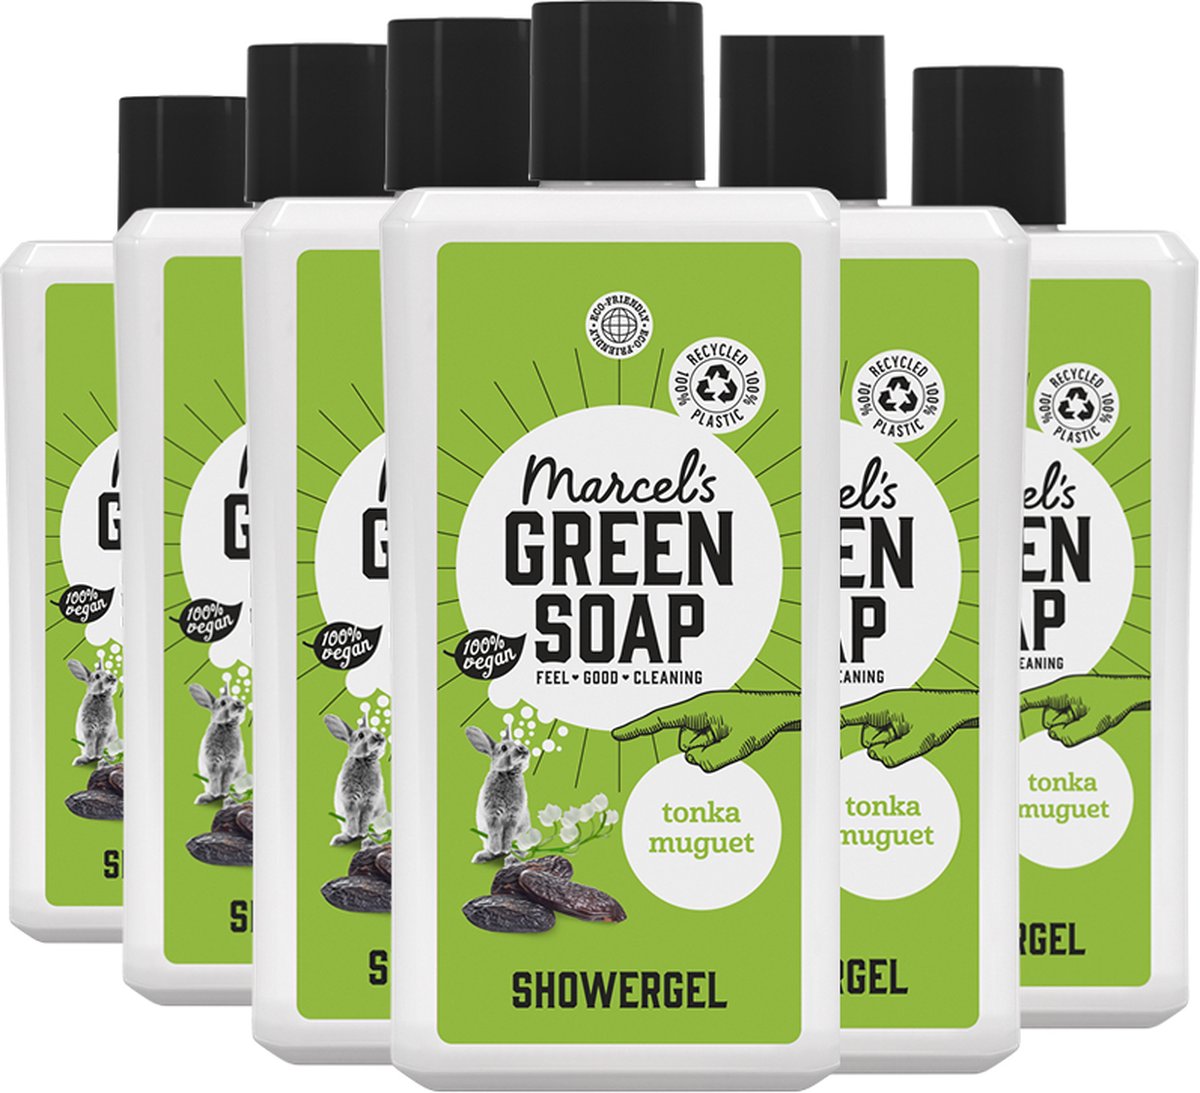 Marcel's Green Soap Shower Gel Tonka & Muguet - 6 x 500 ml